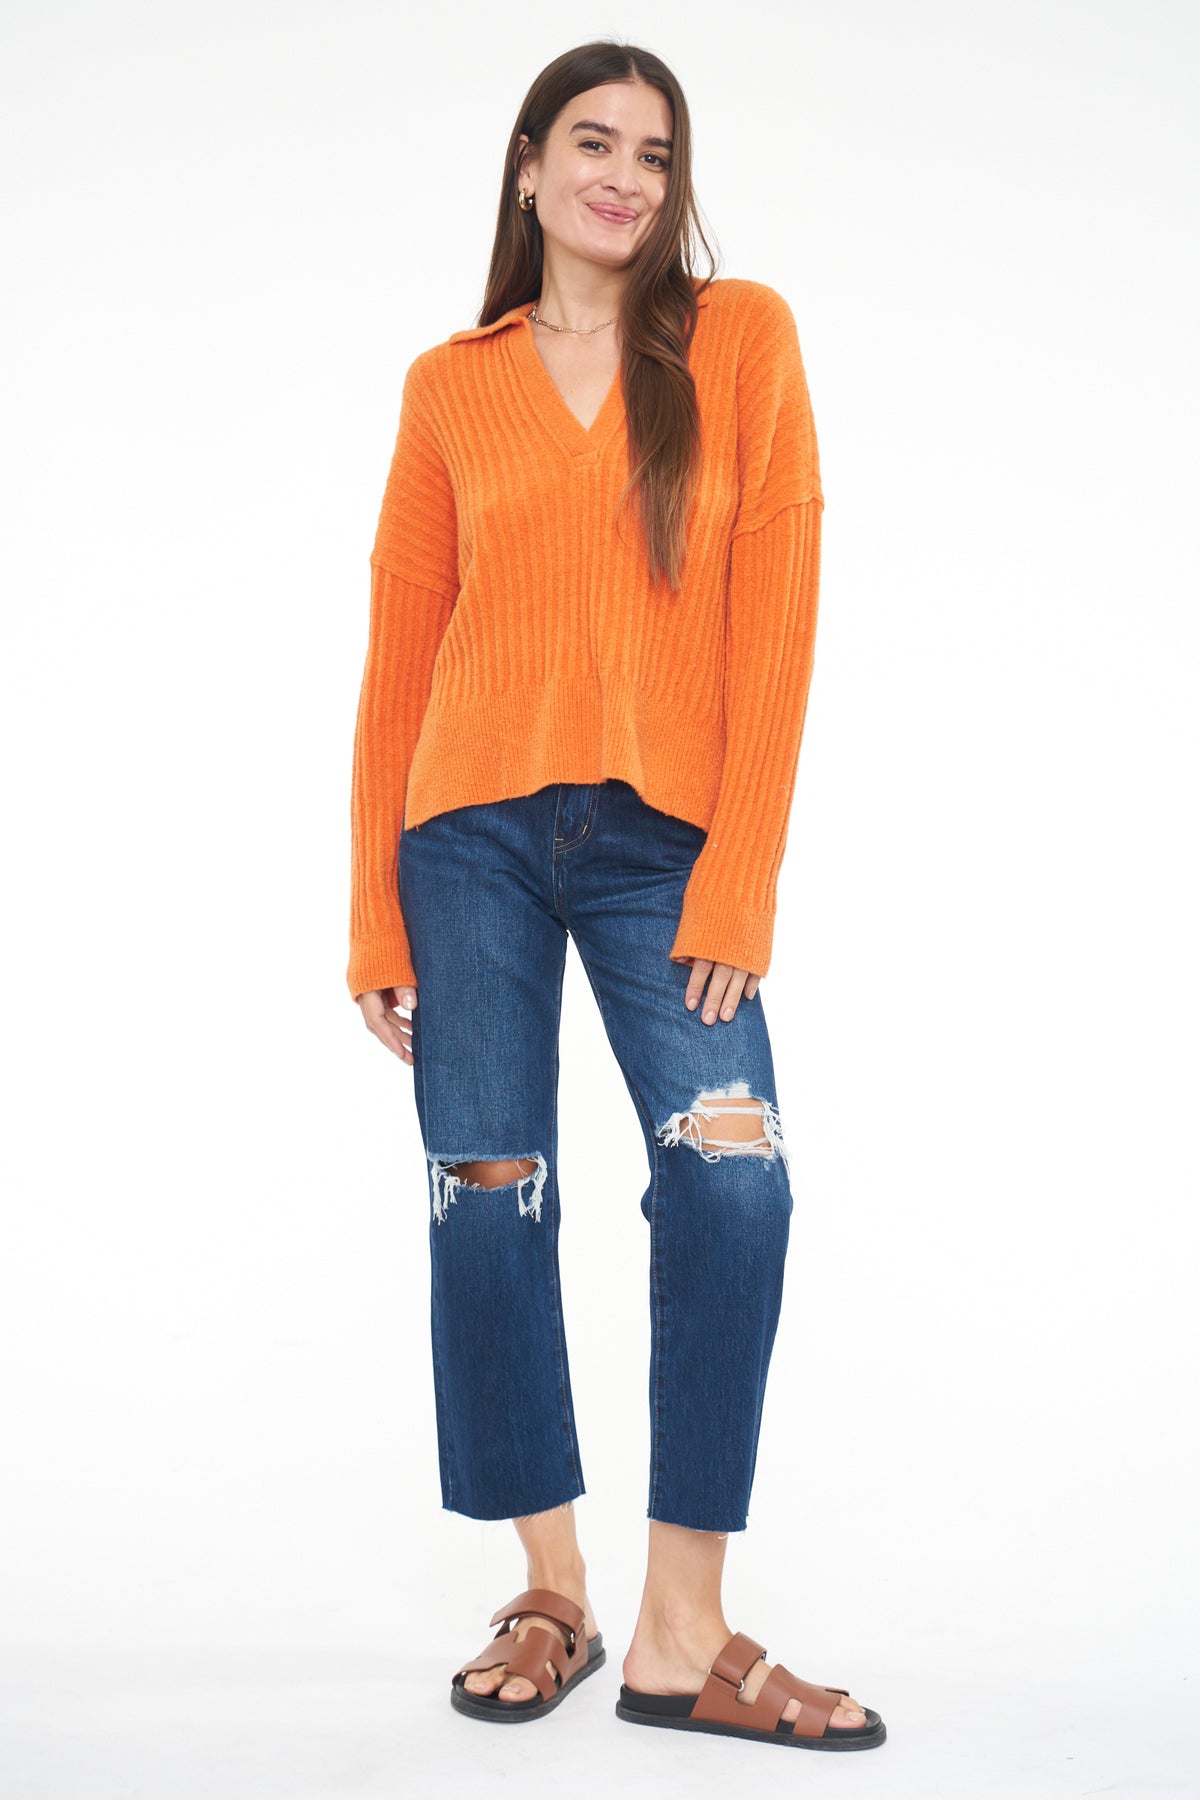 Zoe Relaxed Polo Sweater - Burnt Orange